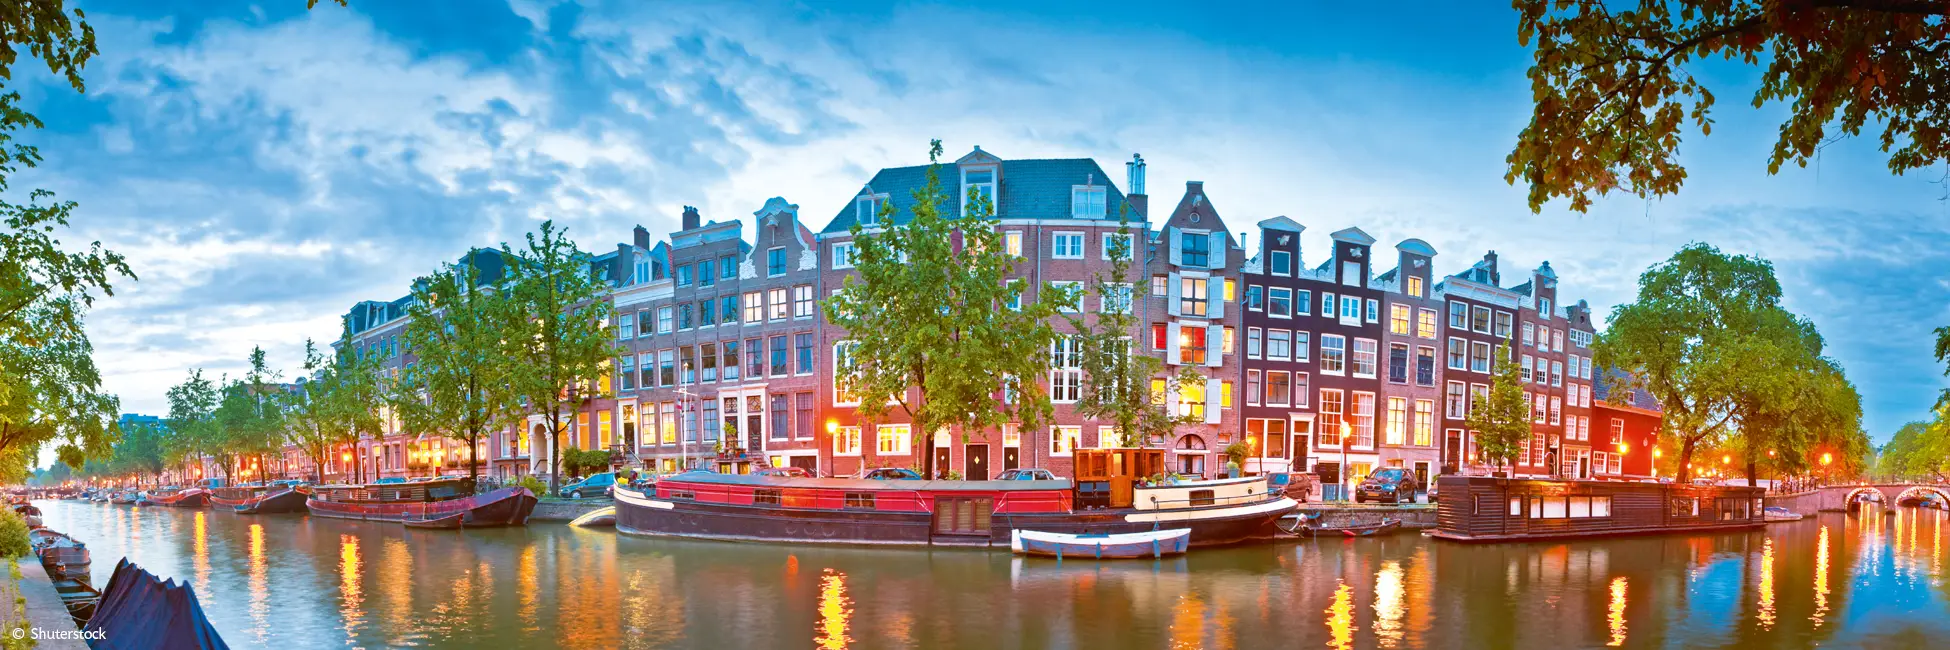 Slider canal d'Amsterdam